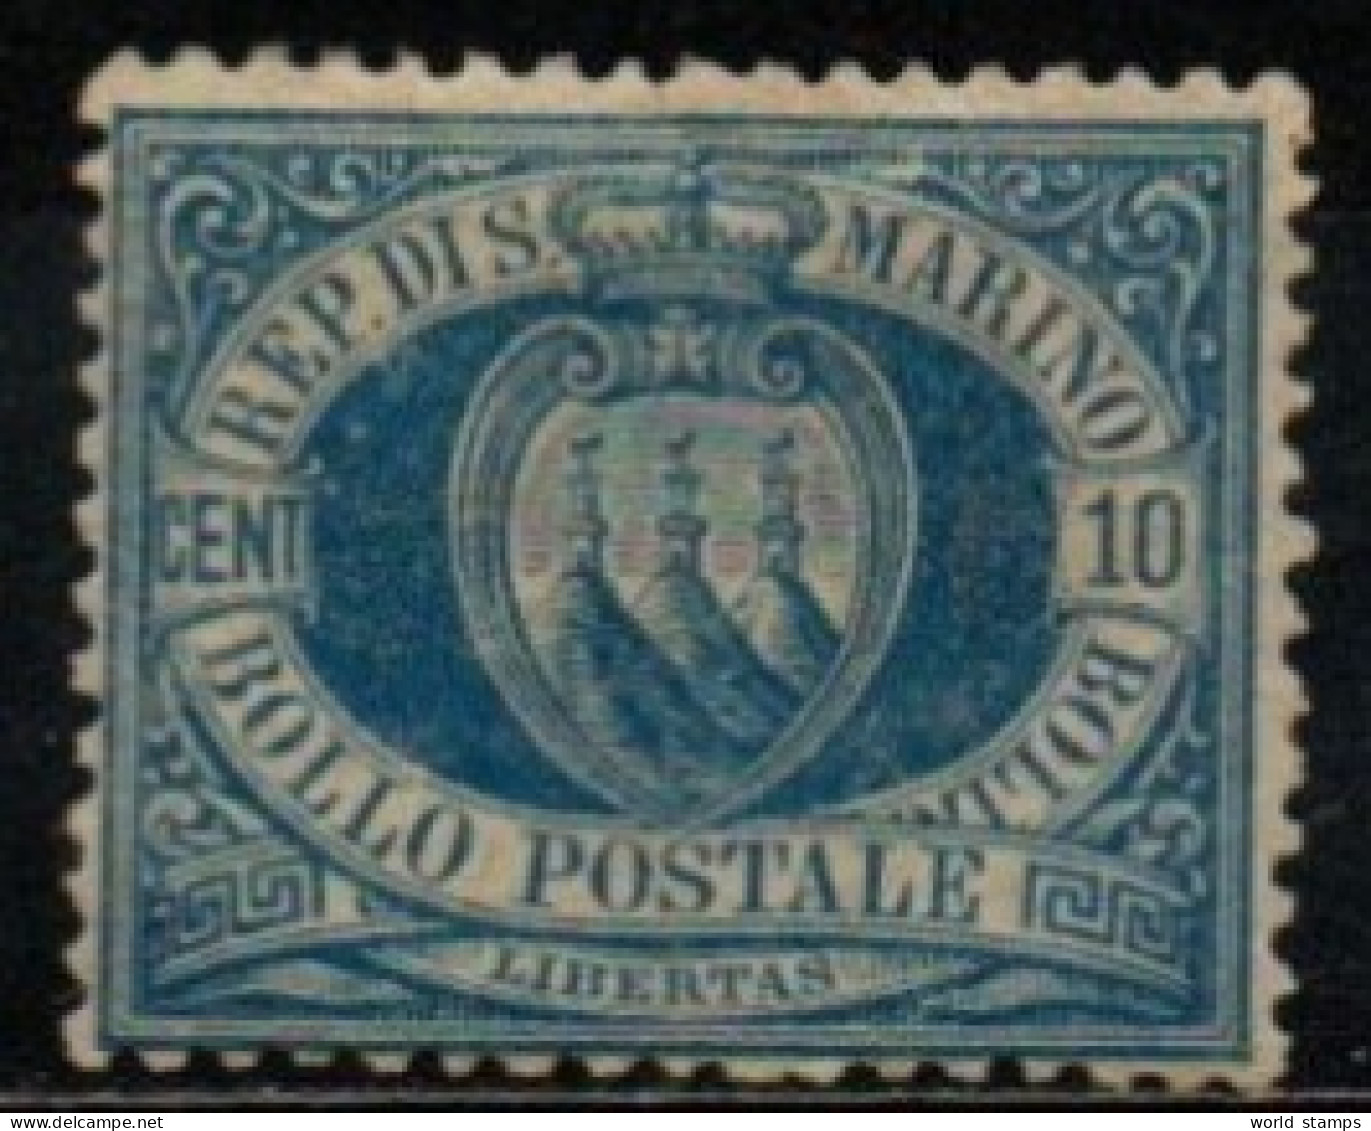 SAINT-MARIN 1877-90 * DEFECTEUX - Unused Stamps